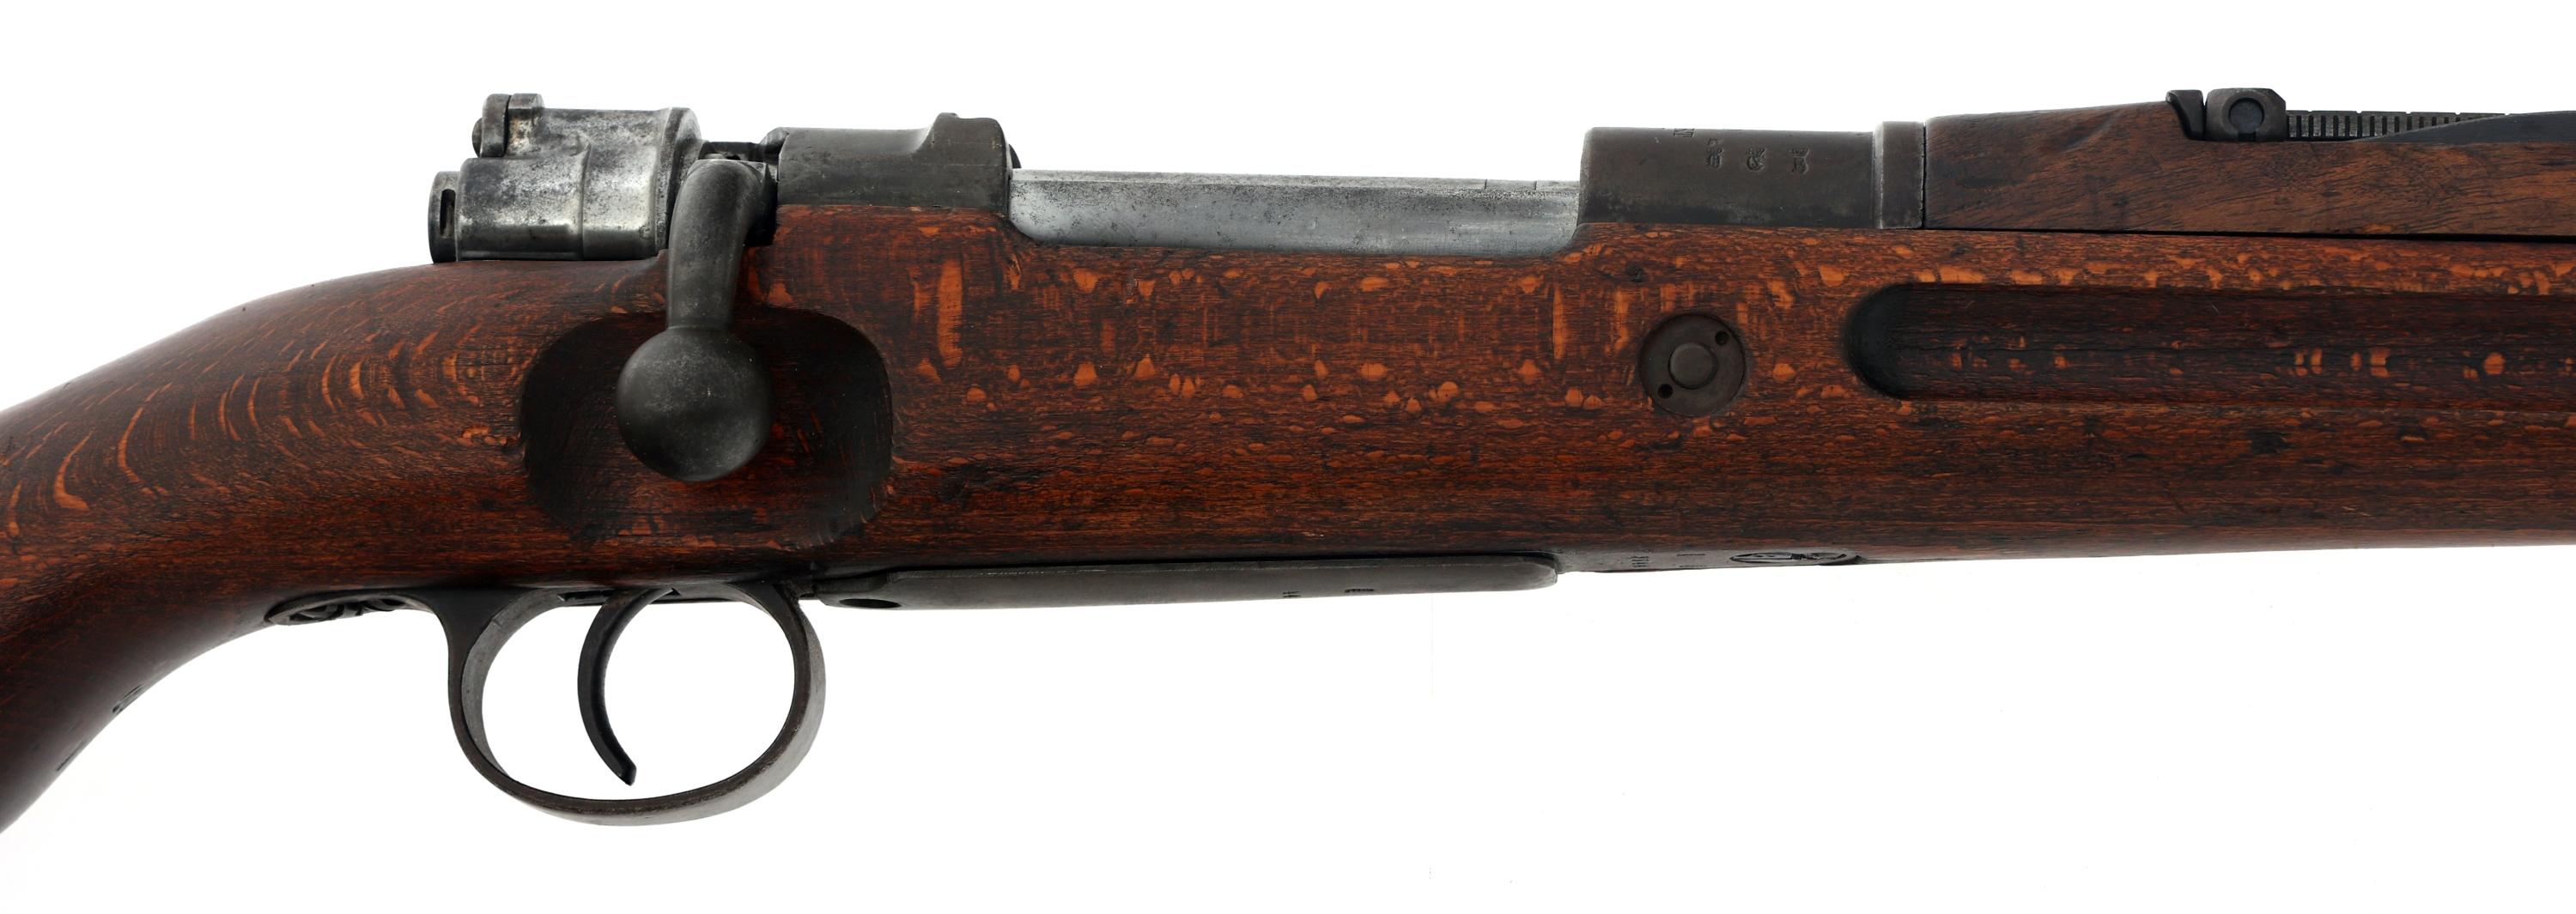 1917 WWI GERMAN ERFURT KAR 98a 7.92mm CAL RIFLE